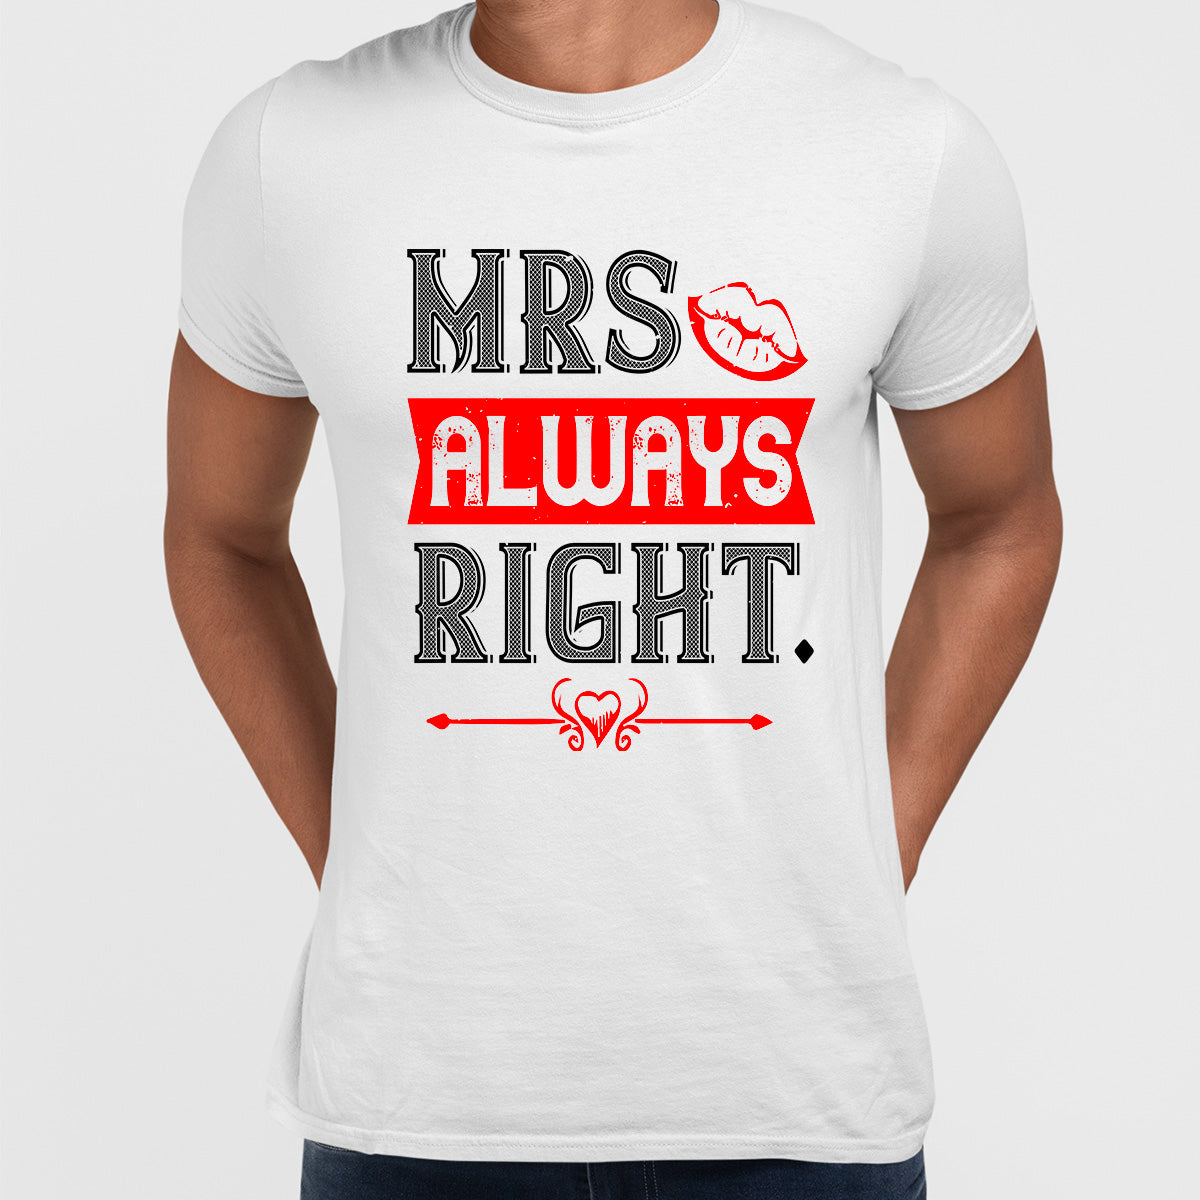 Mrs always right - valentine's day T-shirt edition - Kuzi Tees